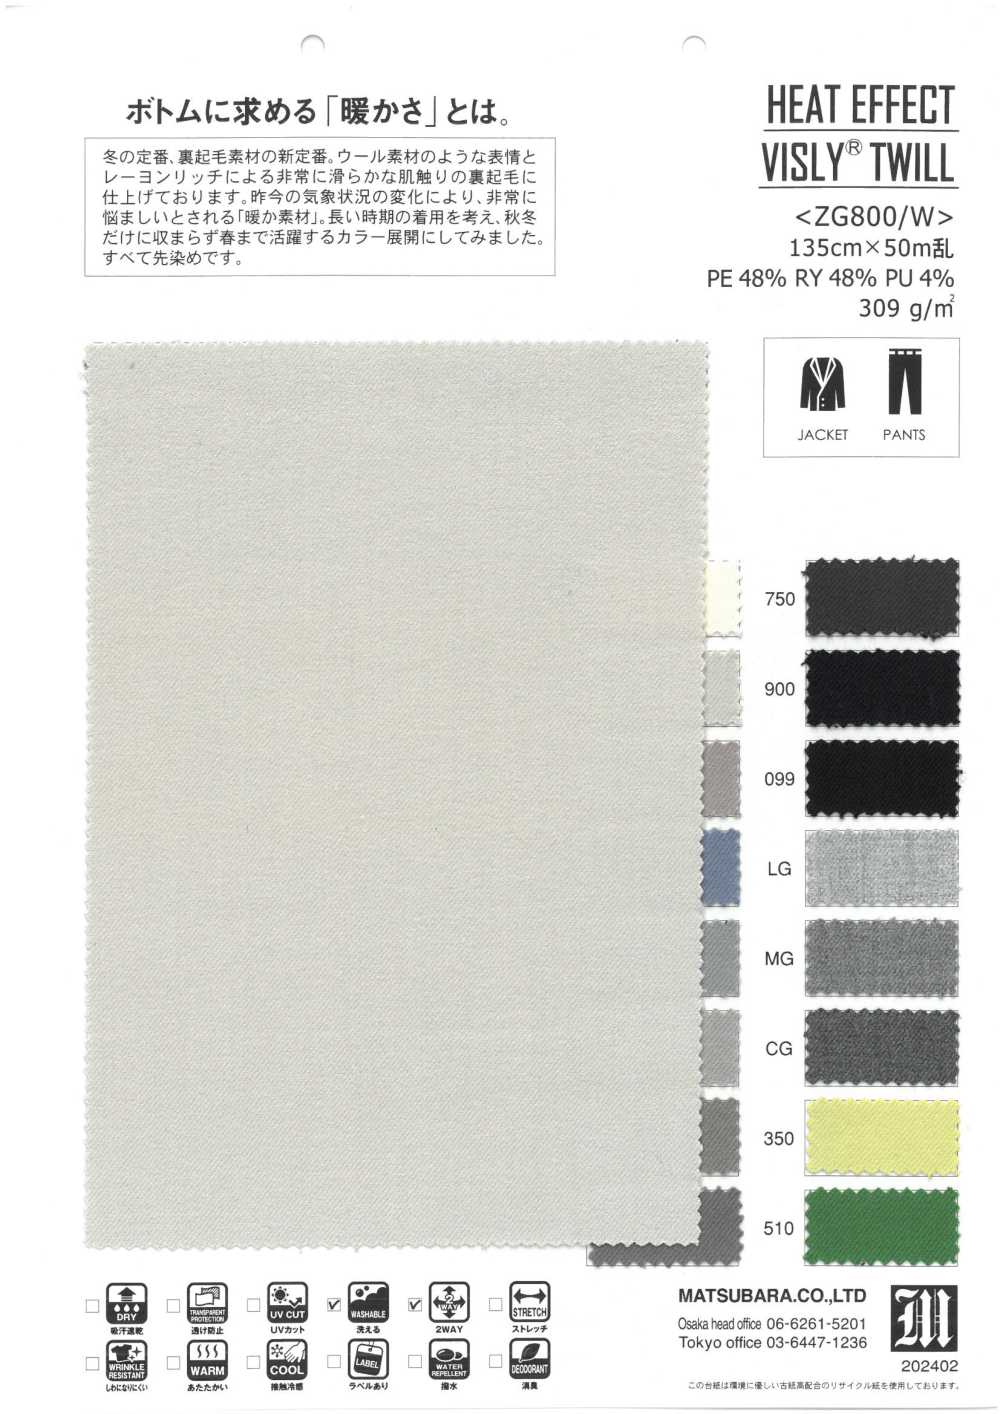 ZG800/W EFFET CHALEUR VISLY®️ TWILL[Fabrication De Textile] Matsubara